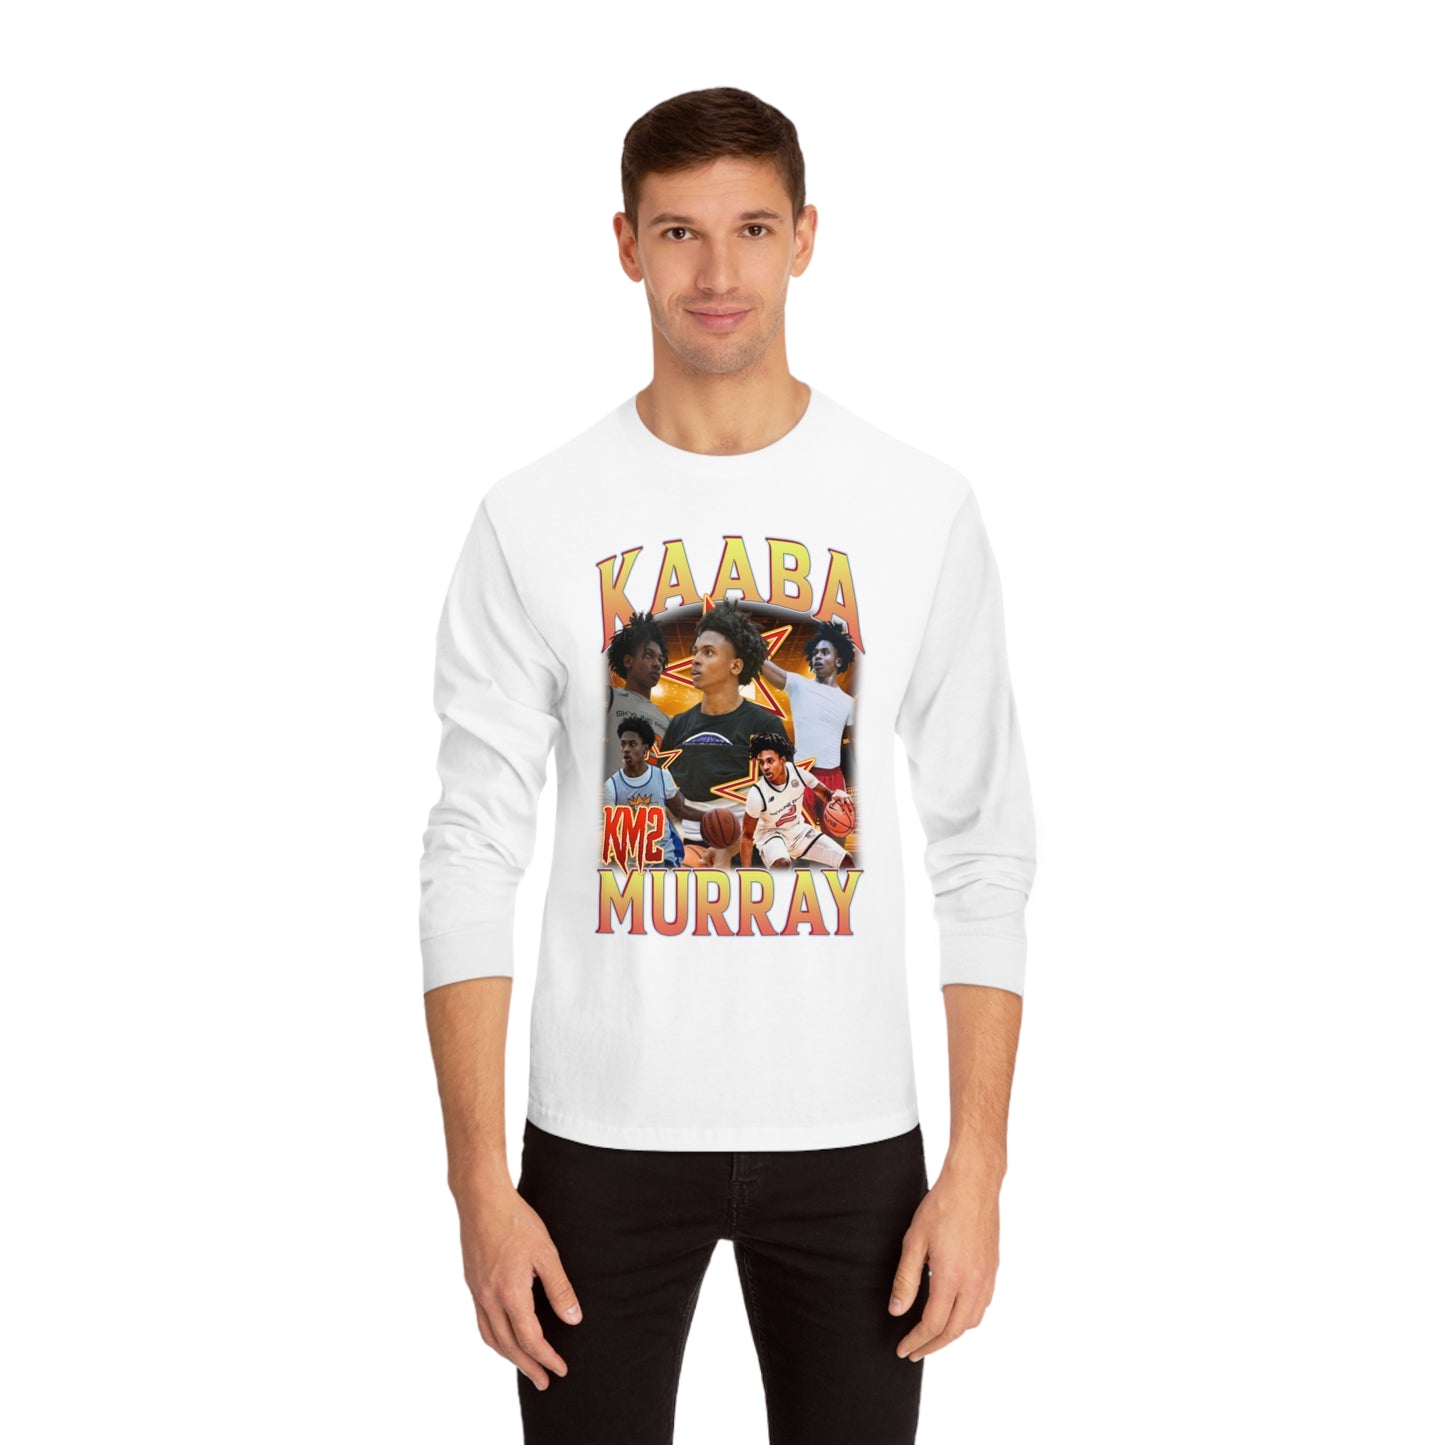 Kaaba Murray Long Sleeve T-Shirt